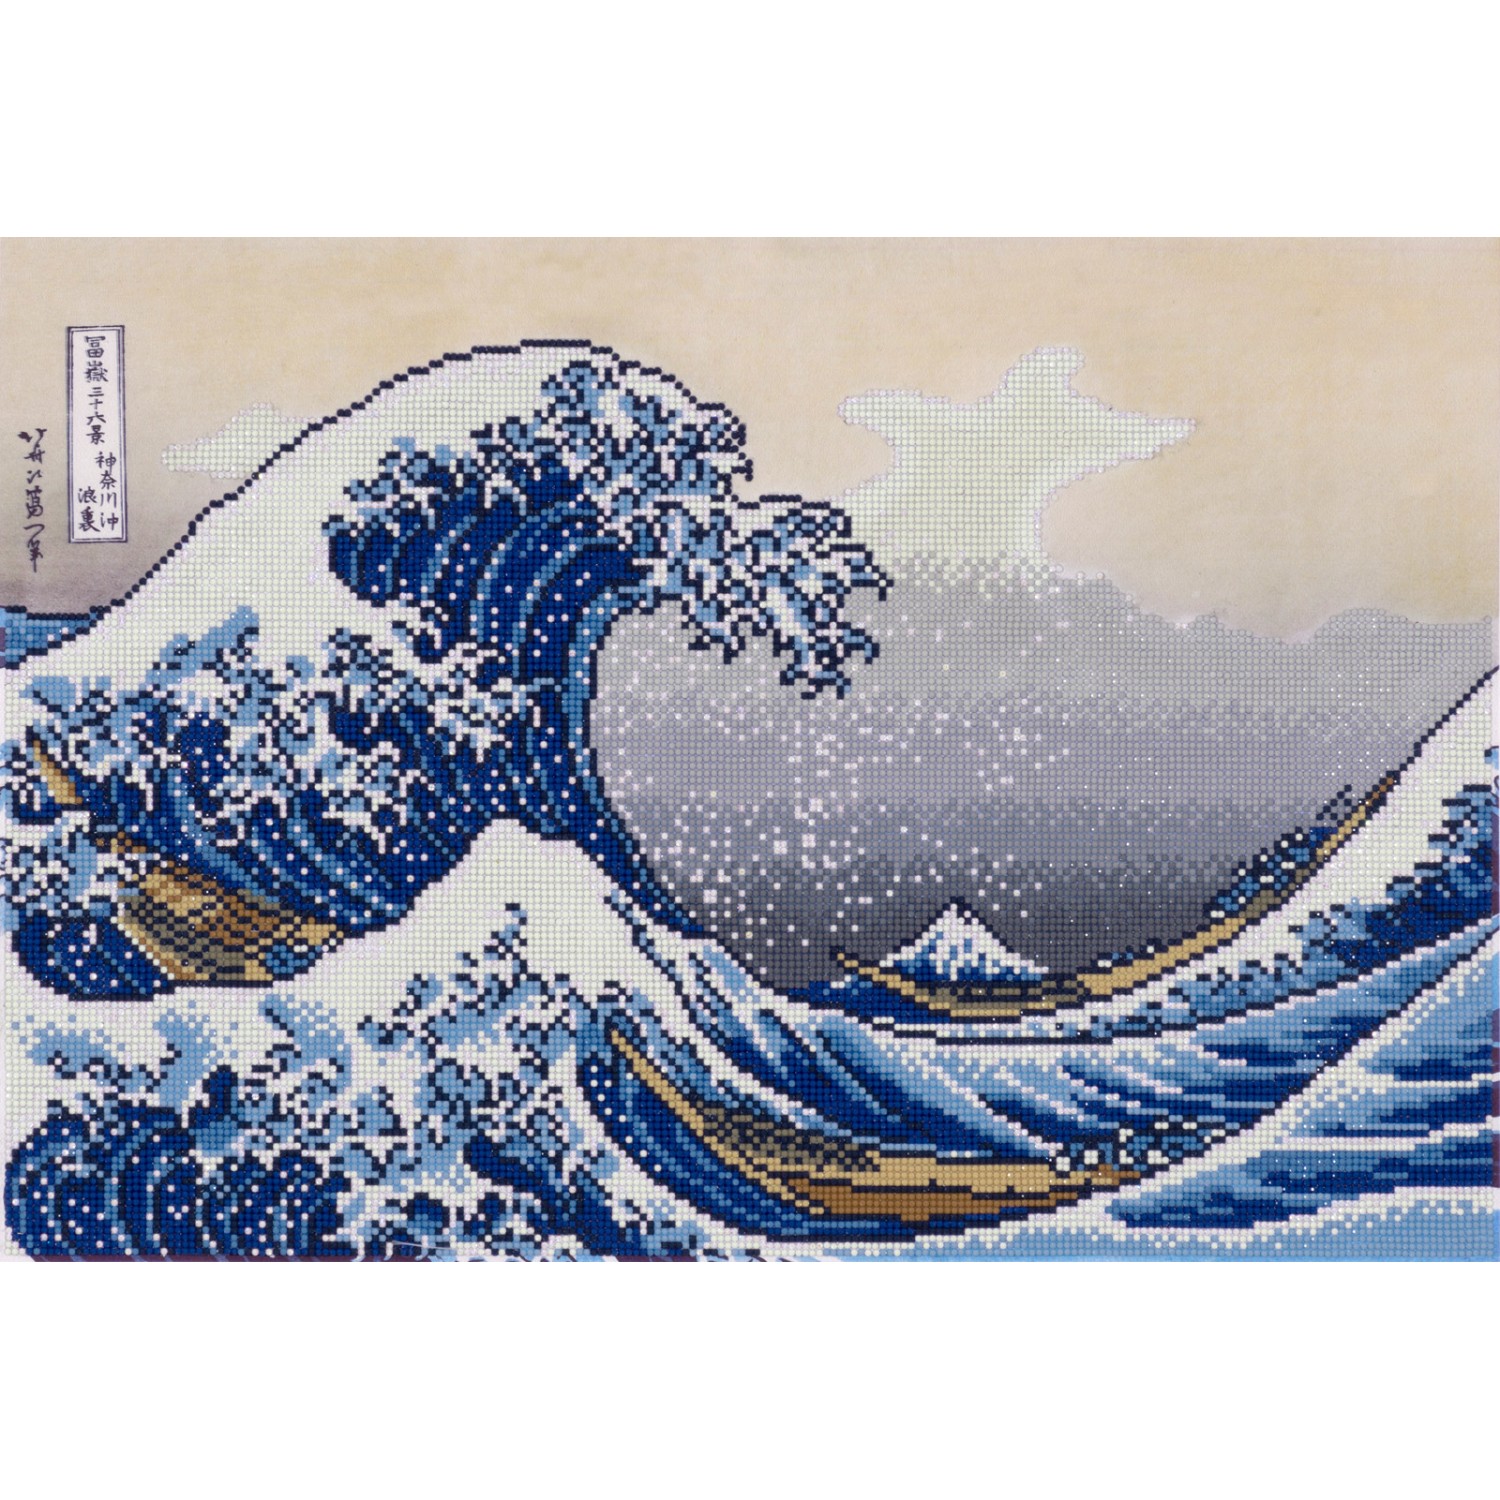 A Big Wave off Kanagawa (Hokusai)